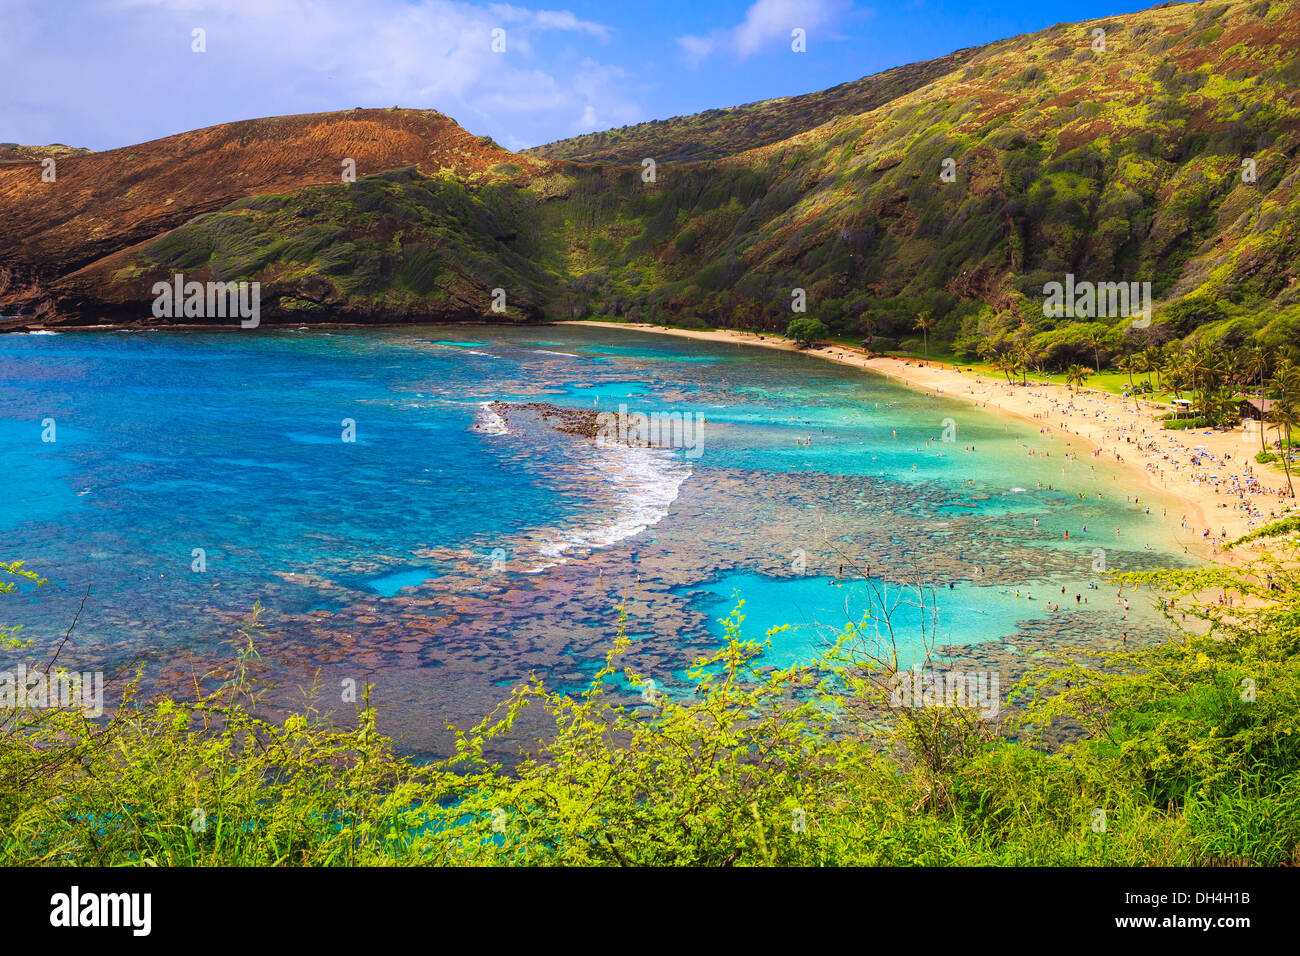 Hanauma Bay, Oahu, Hawaii - Known for Snorkeling Stock Photo